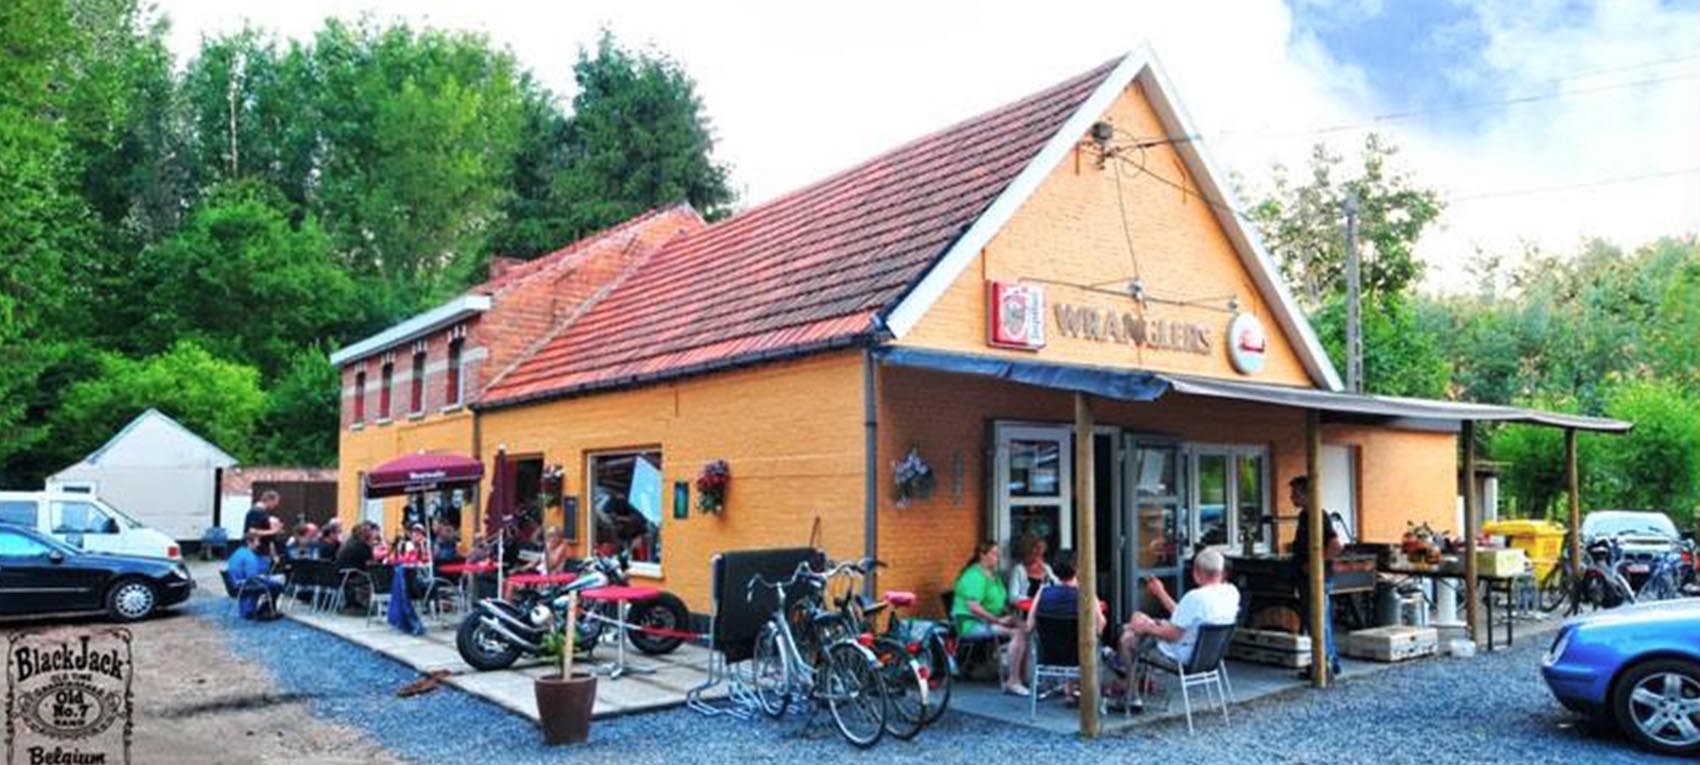 Header Café Roadhouse Wranglers - Kroeg Heist-op-den-Berg